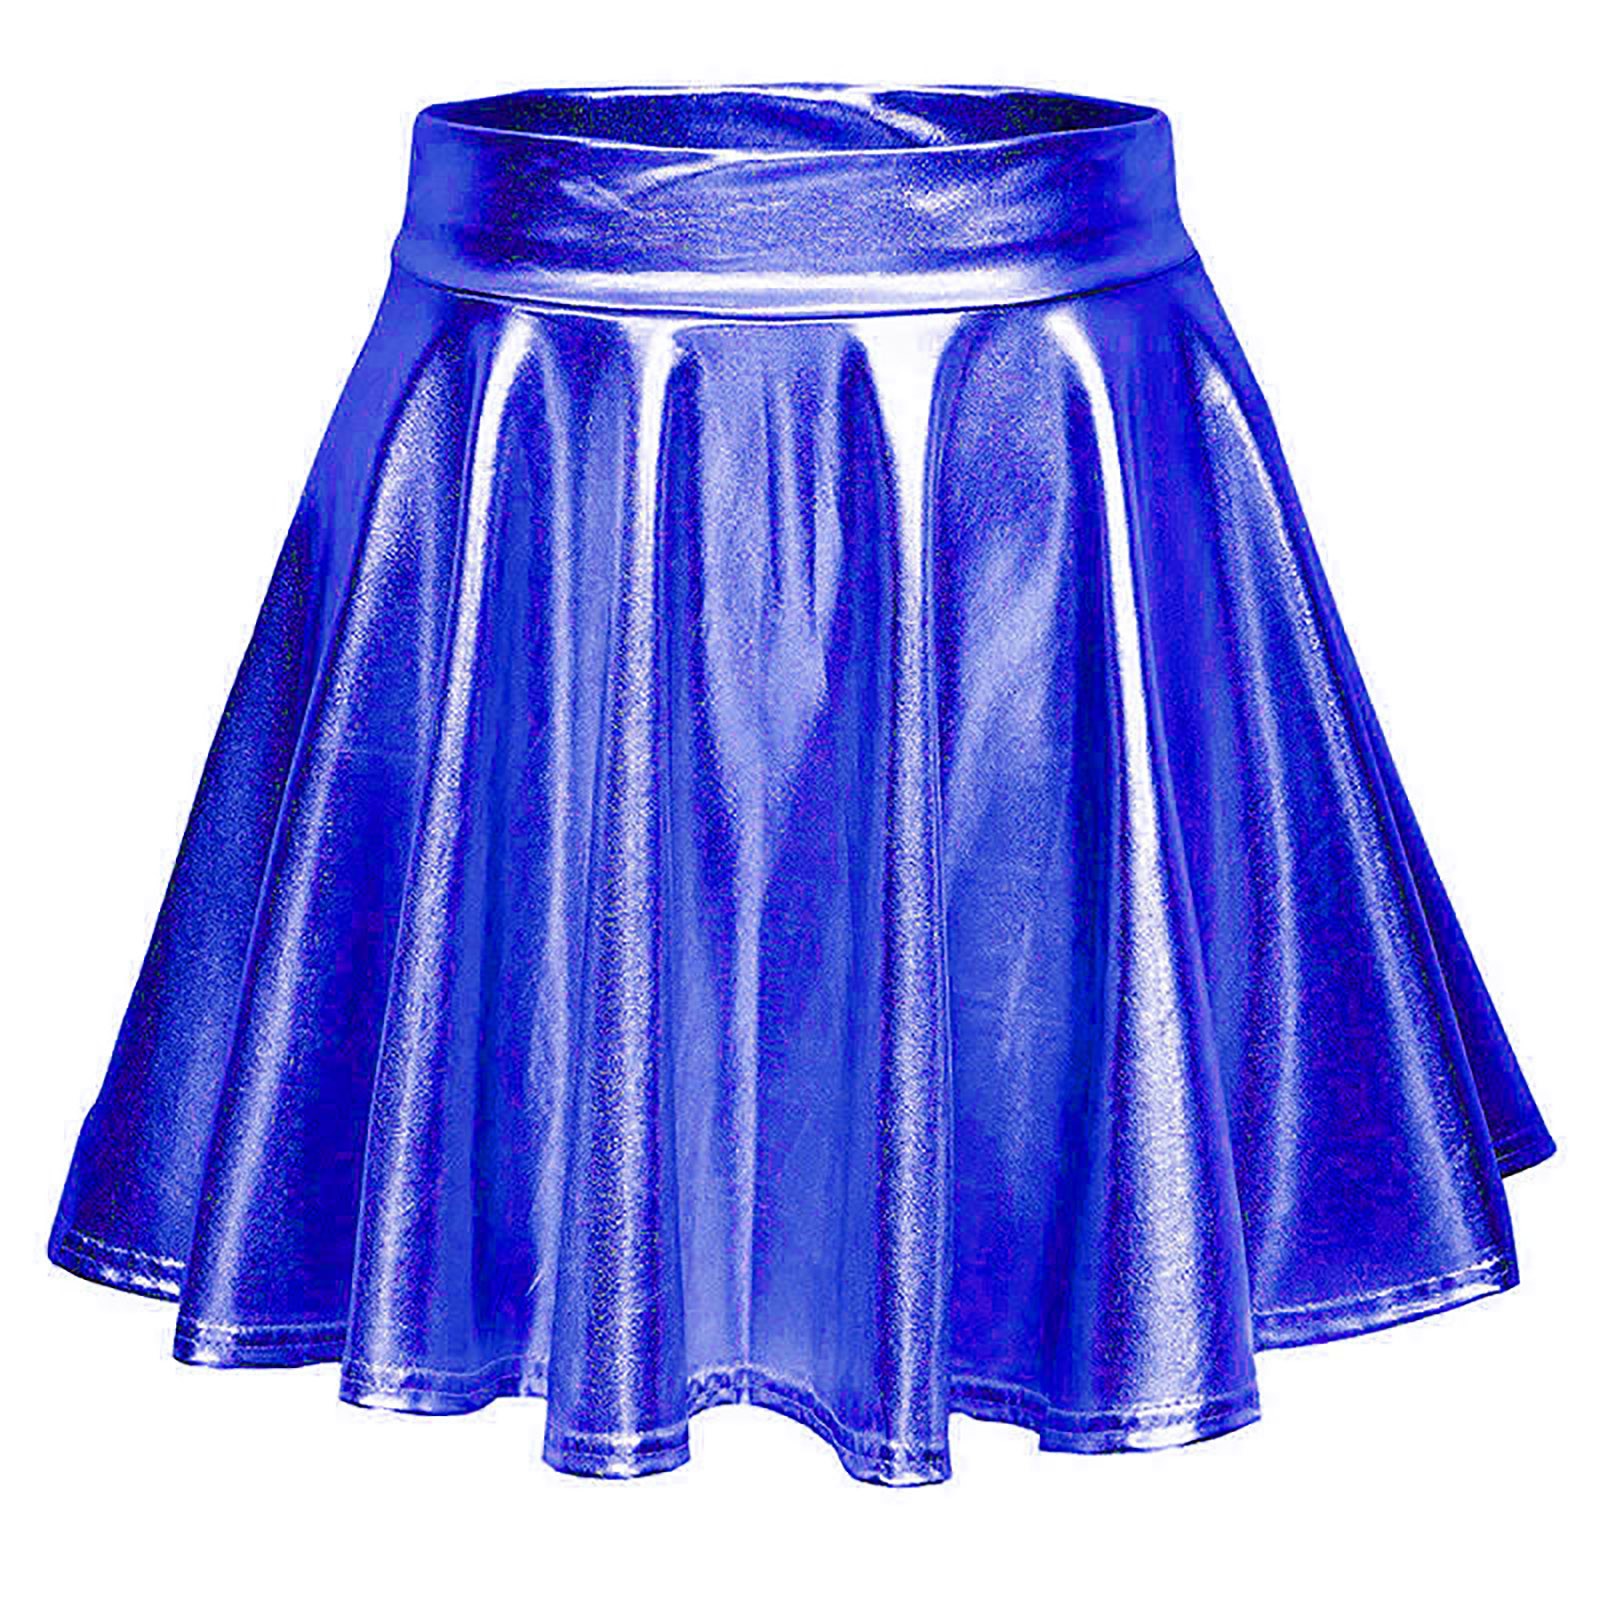 Gzea Bohemian Skirts for Women's Metallic Skater Skirt Sparkly Shiny ...